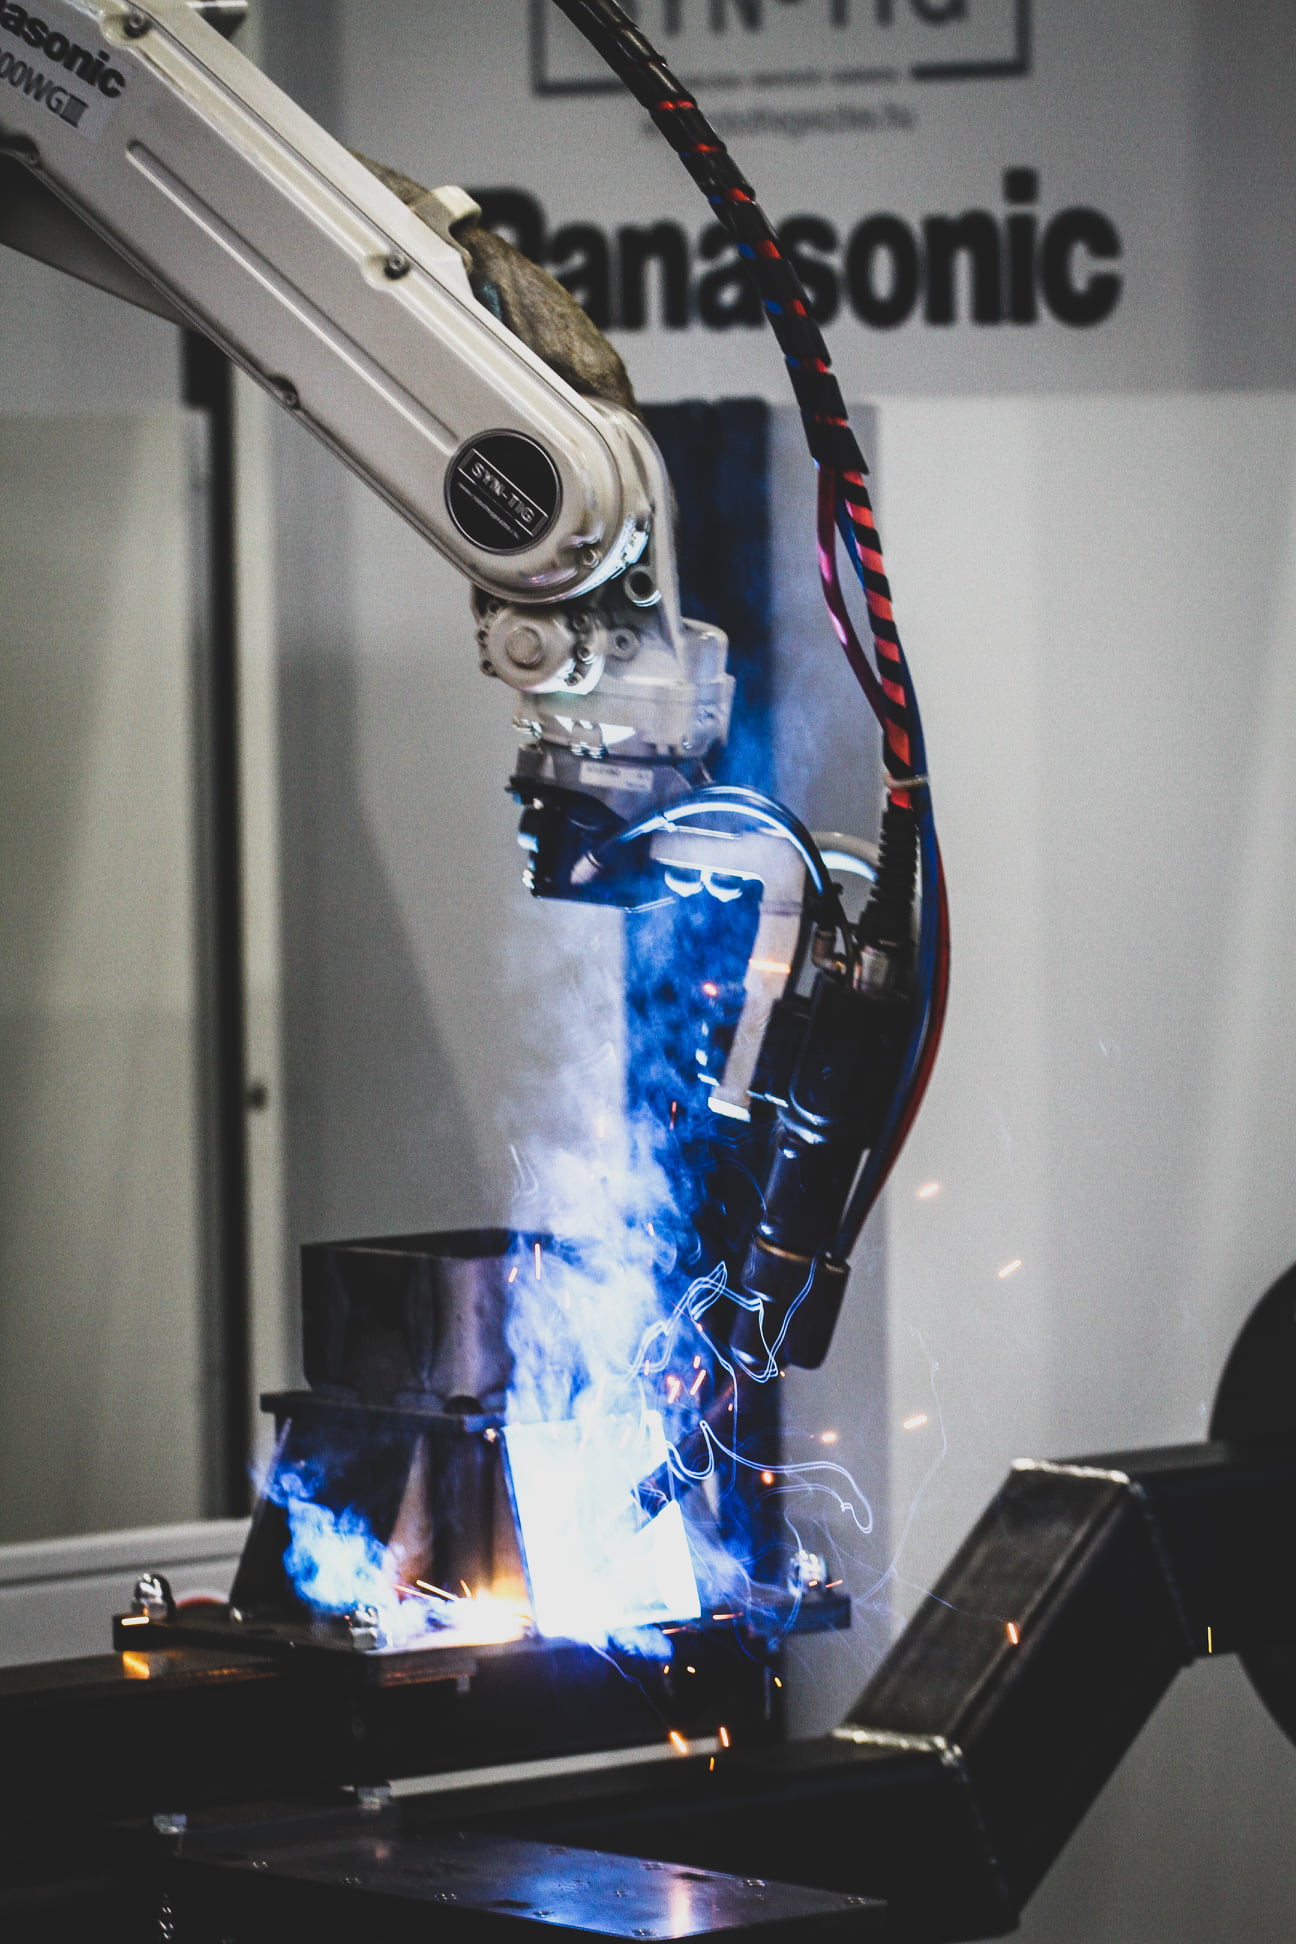 Panasonic welding robot system